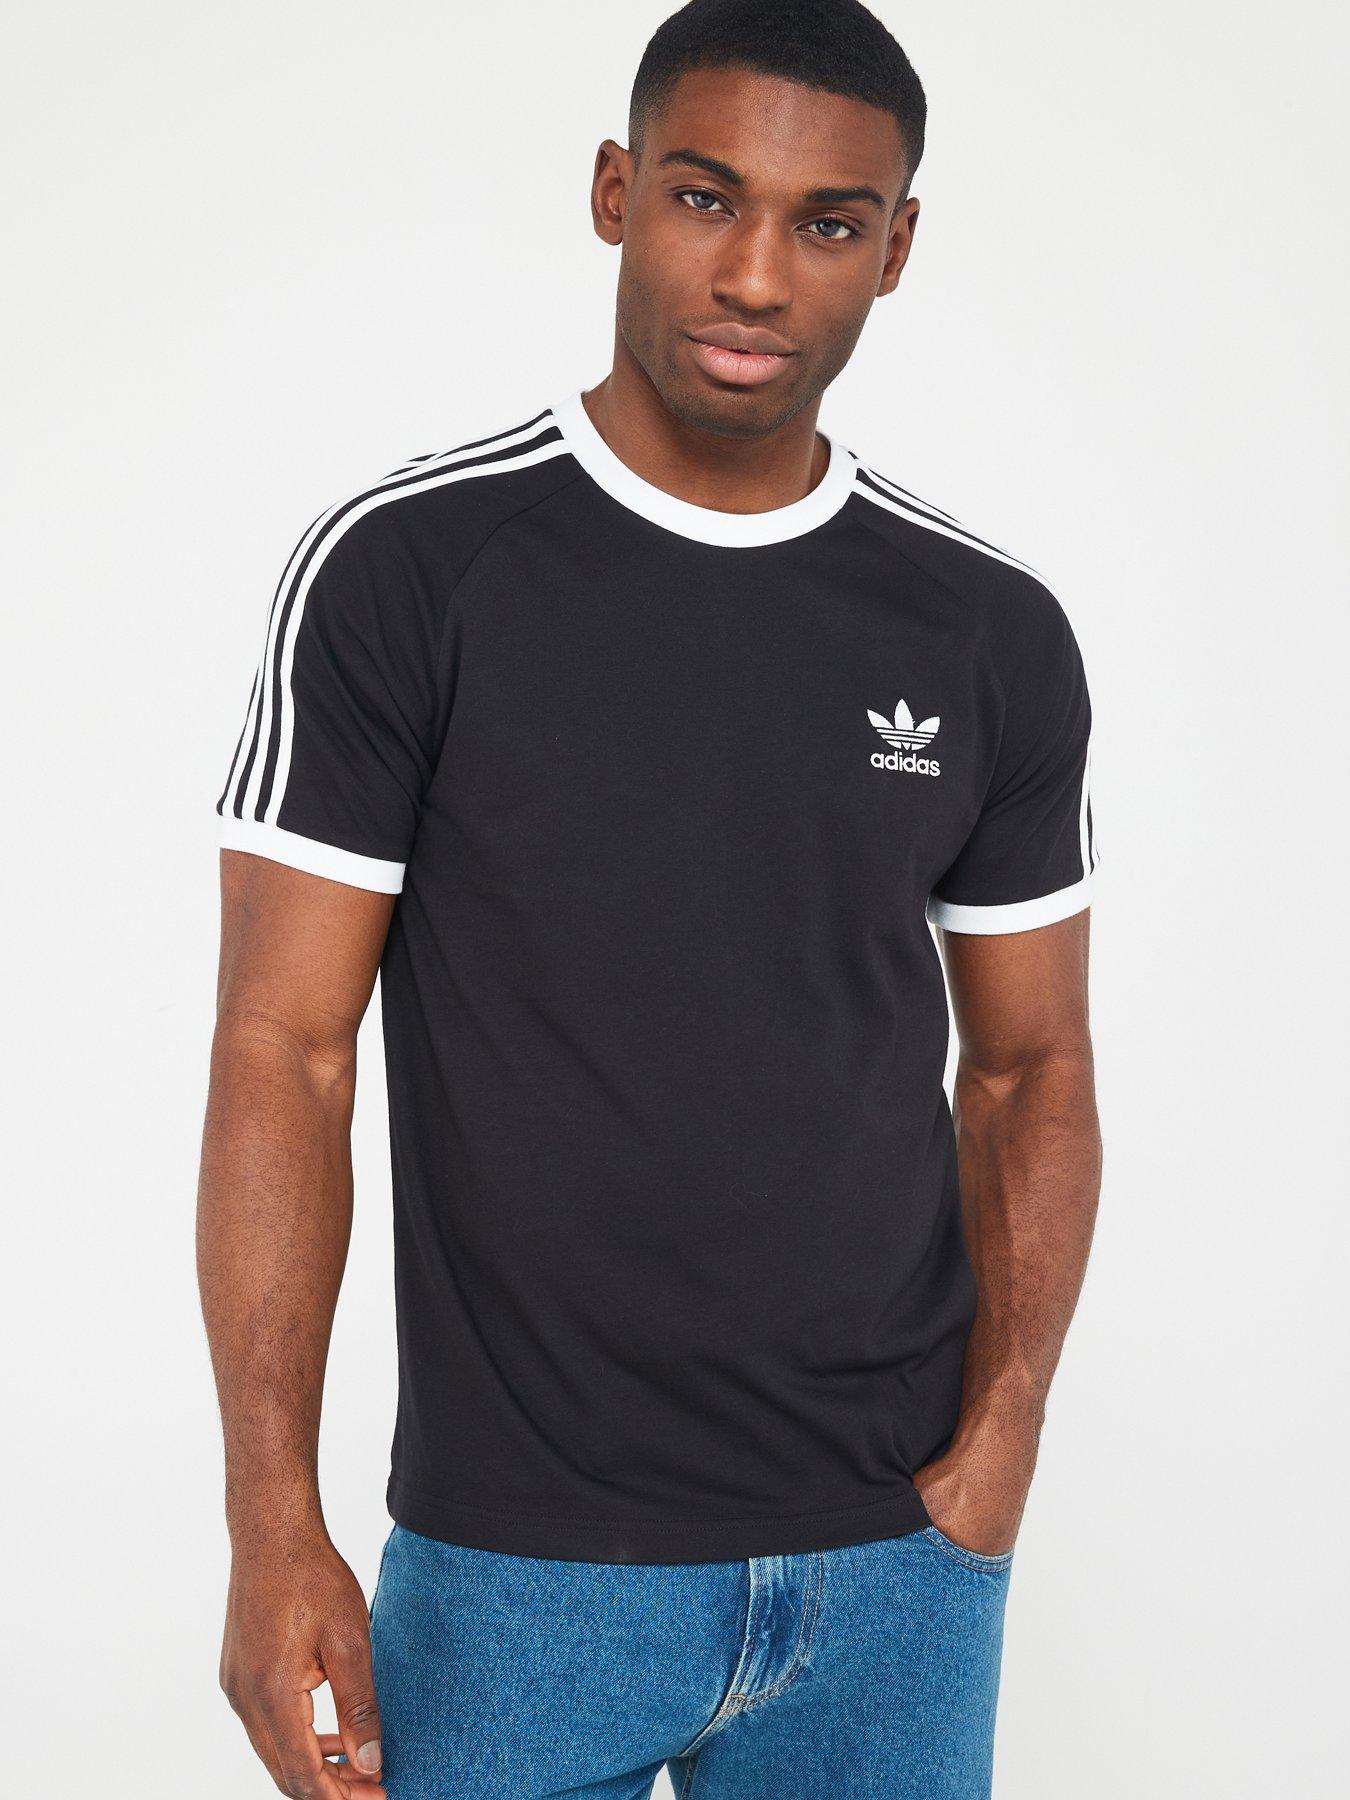 adidas Originals Men's 3-Stripes T-Shirt - Black | very.co.uk